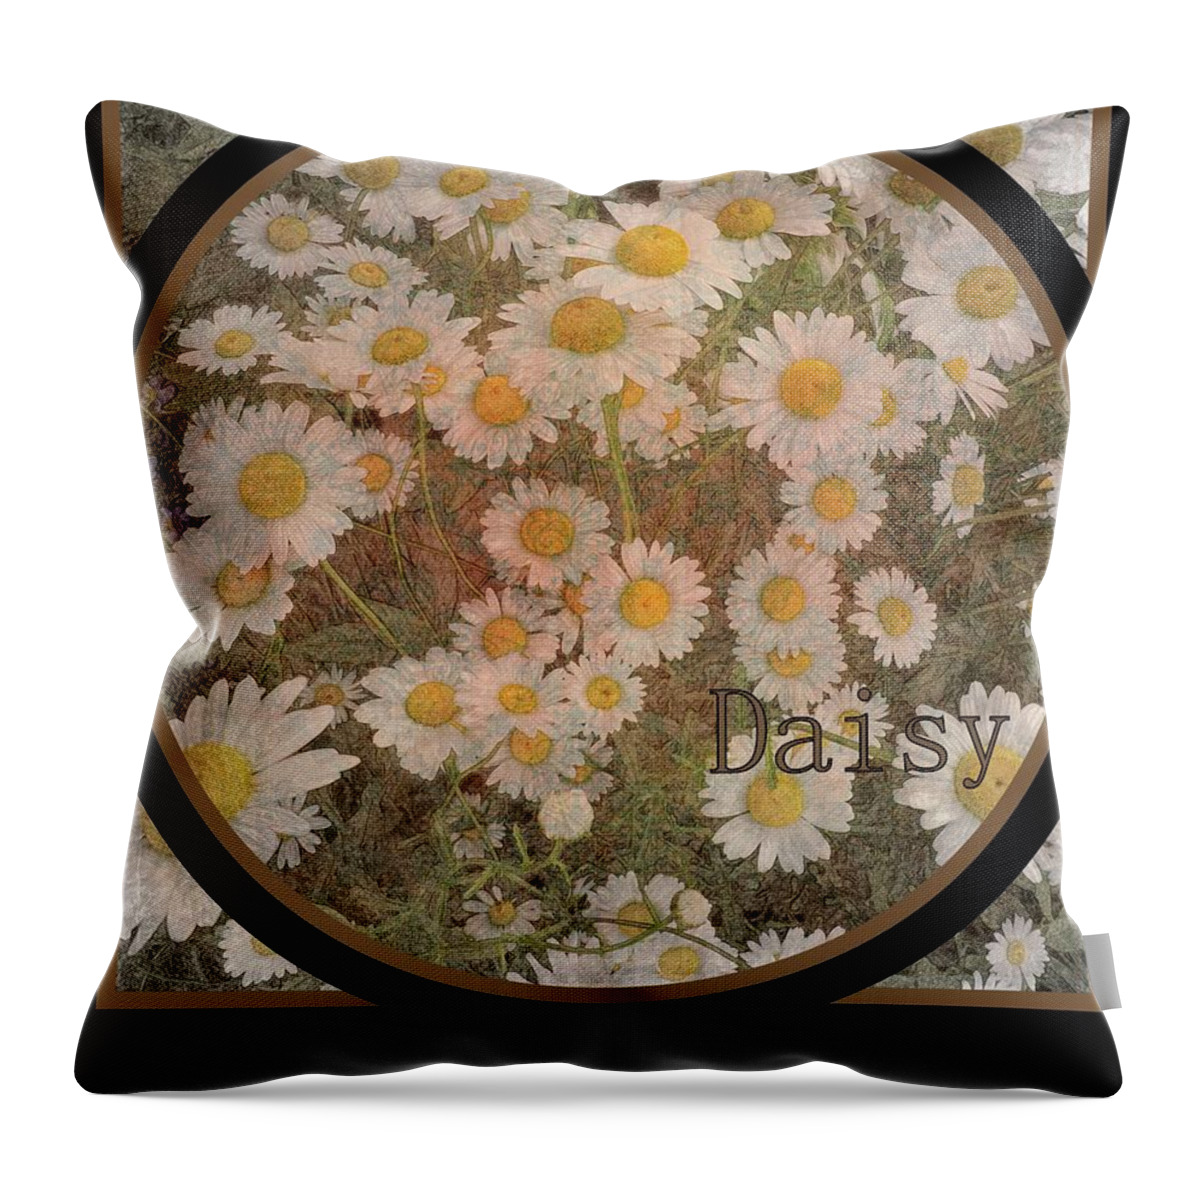 Floral Throw Pillow featuring the photograph Daisy by Jodie Marie Anne Richardson Traugott     aka jm-ART